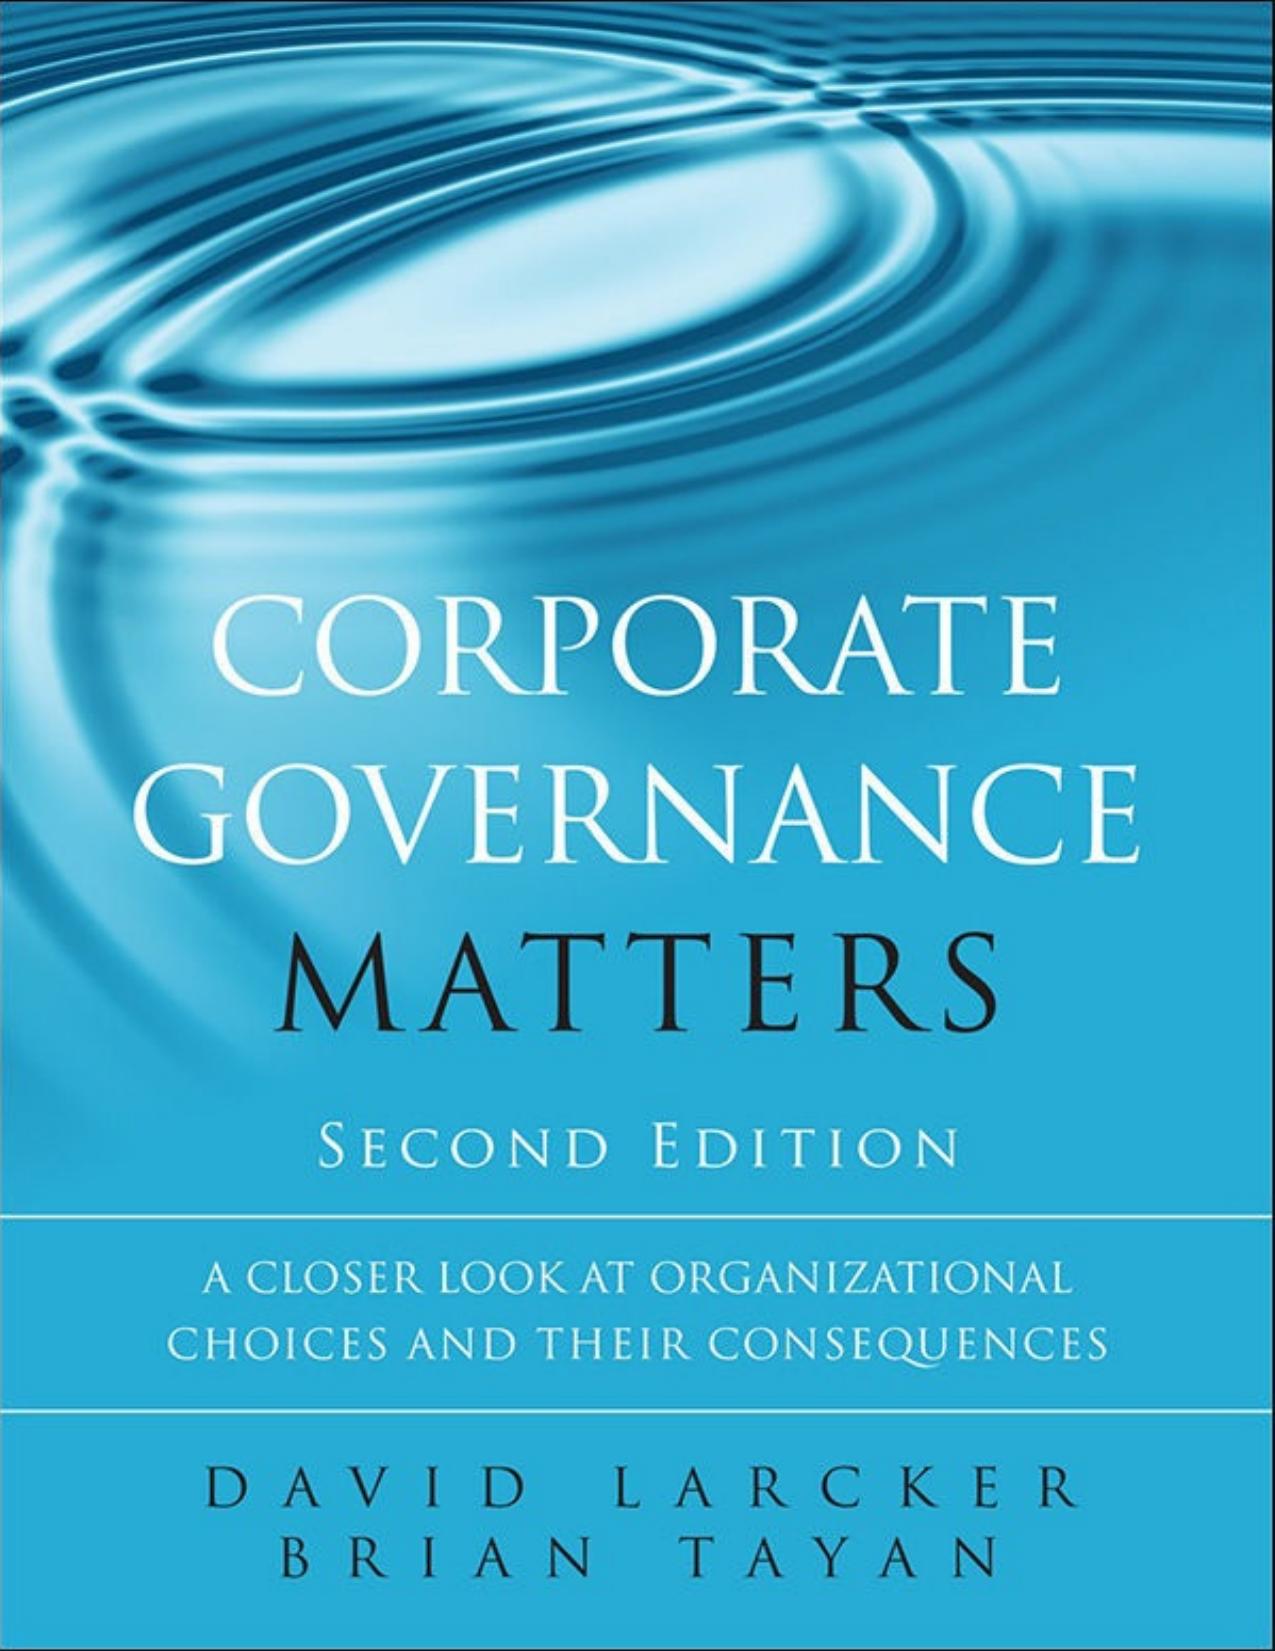 Corporate Governance Matters A Closer Look 2nd Edition.jpg